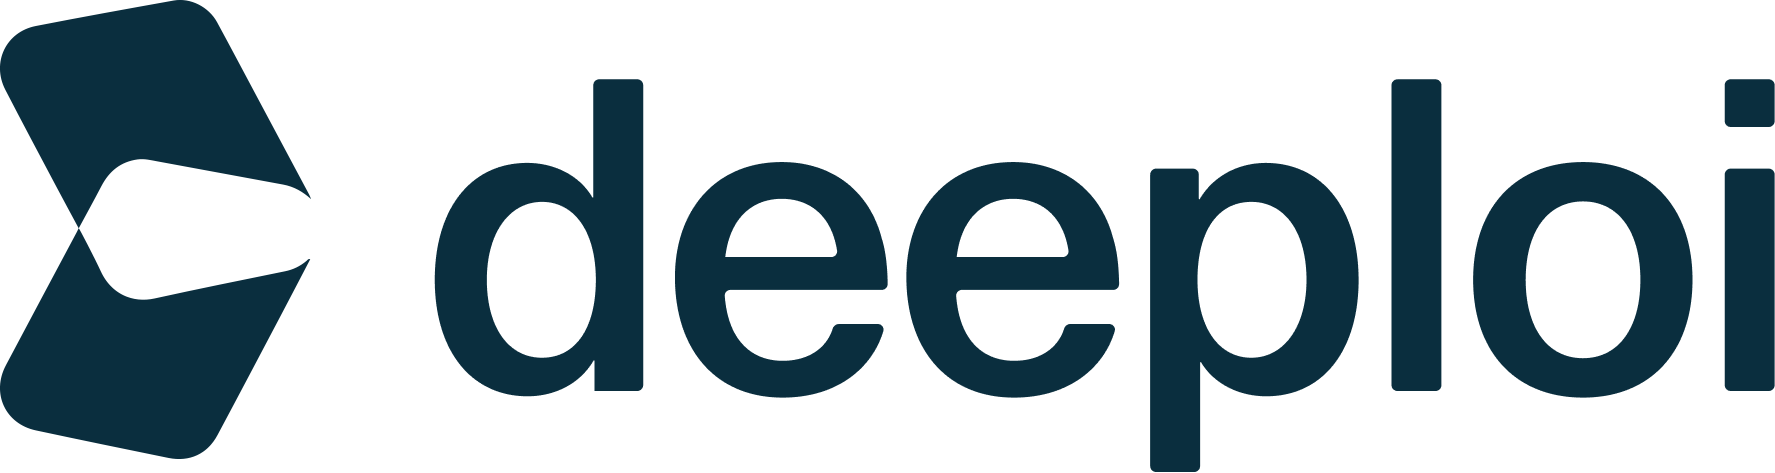 deeploi logo